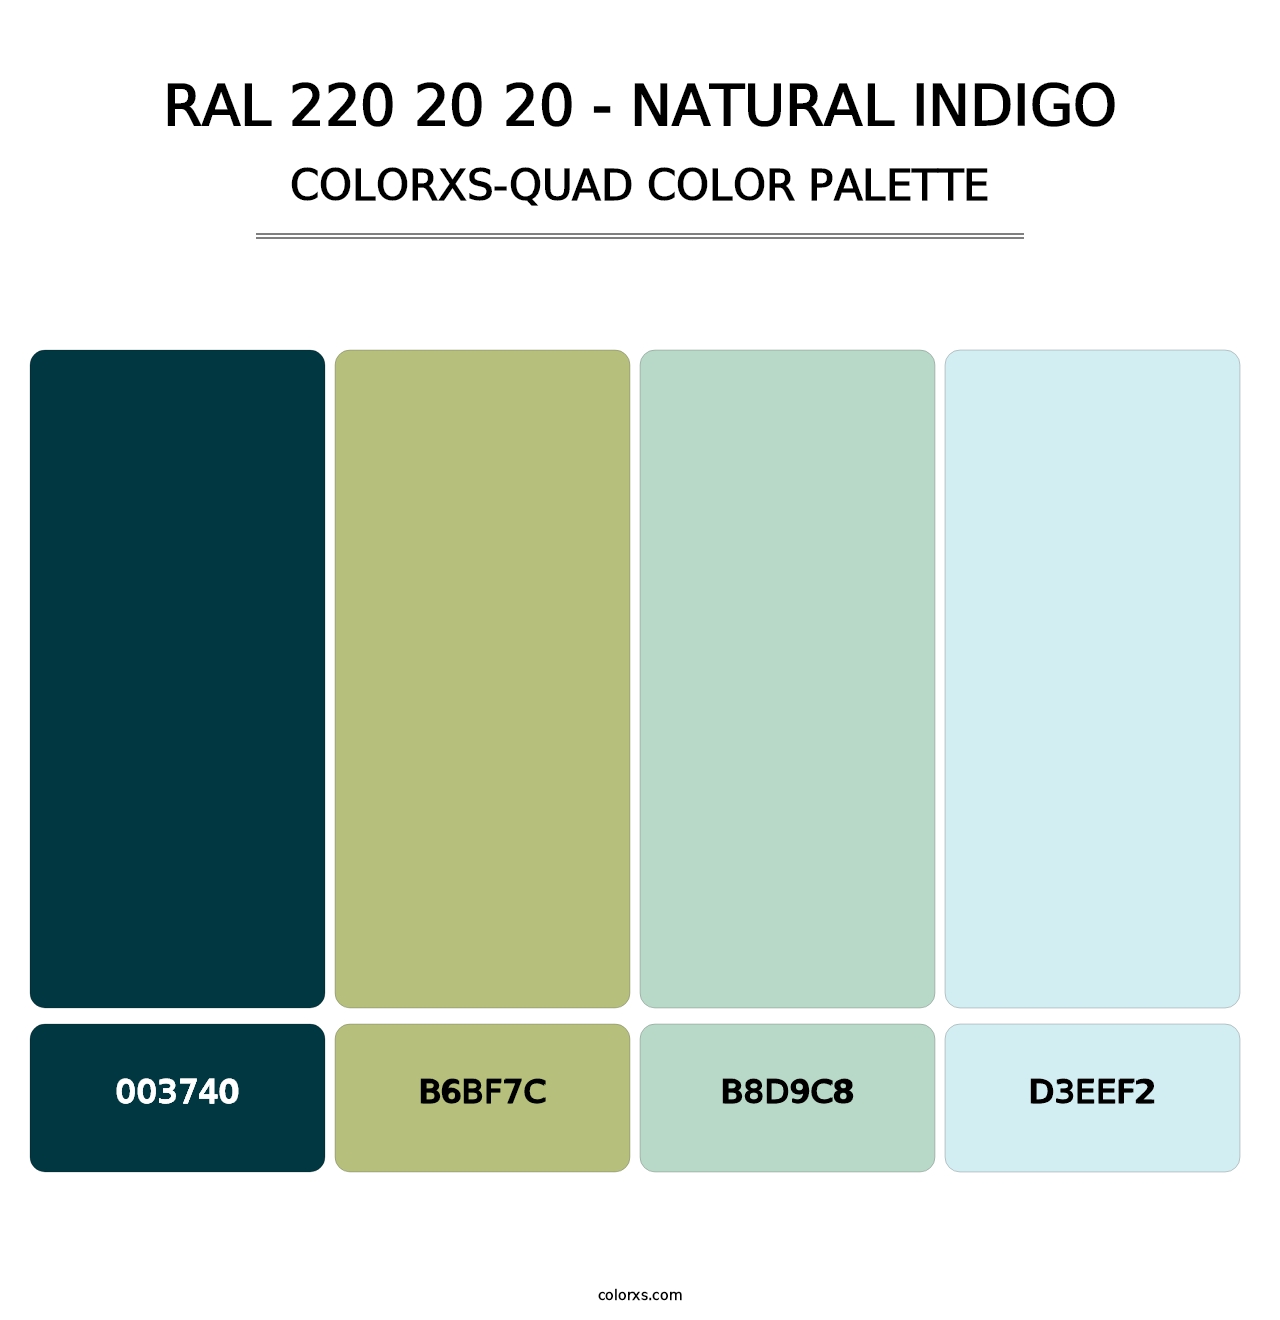 RAL 220 20 20 - Natural Indigo - Colorxs Quad Palette